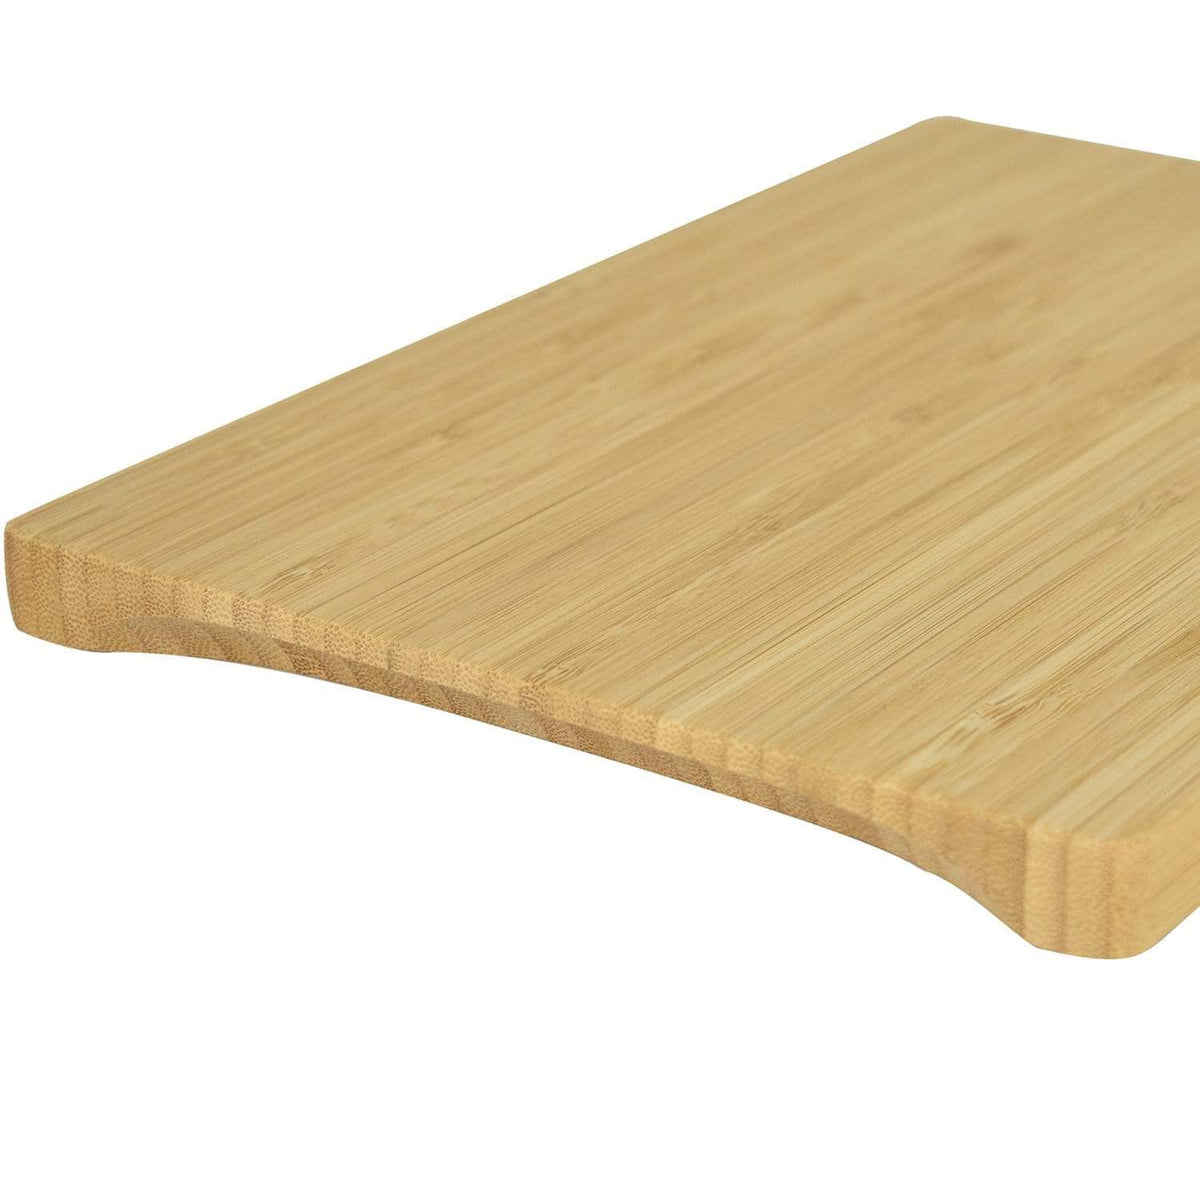 *NEW* Bamboo undercut cutting &amp; serving boards